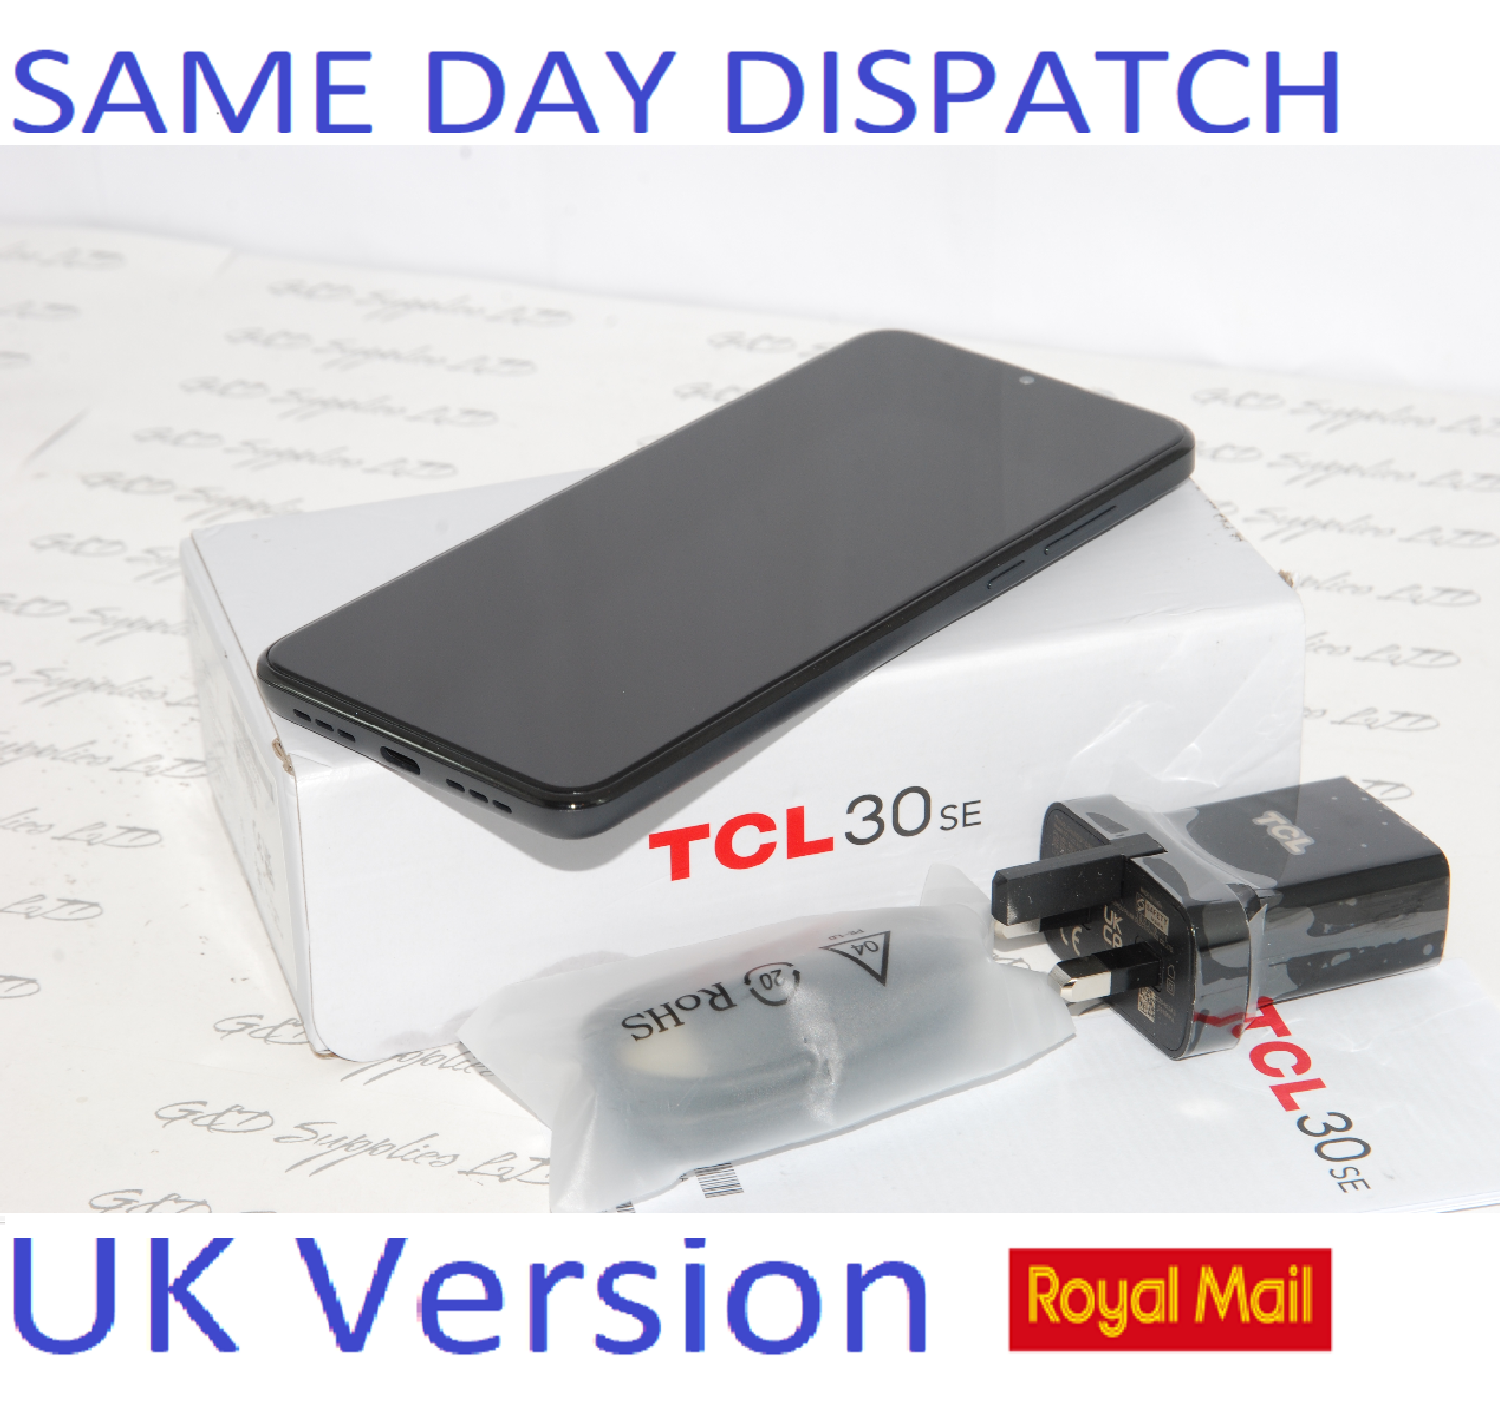 TCL 30 SE 6.52" 64GB 4G  Android Smartphone  4GB RAM Unlocked Dual-Sim - Grey NFC  UK version #